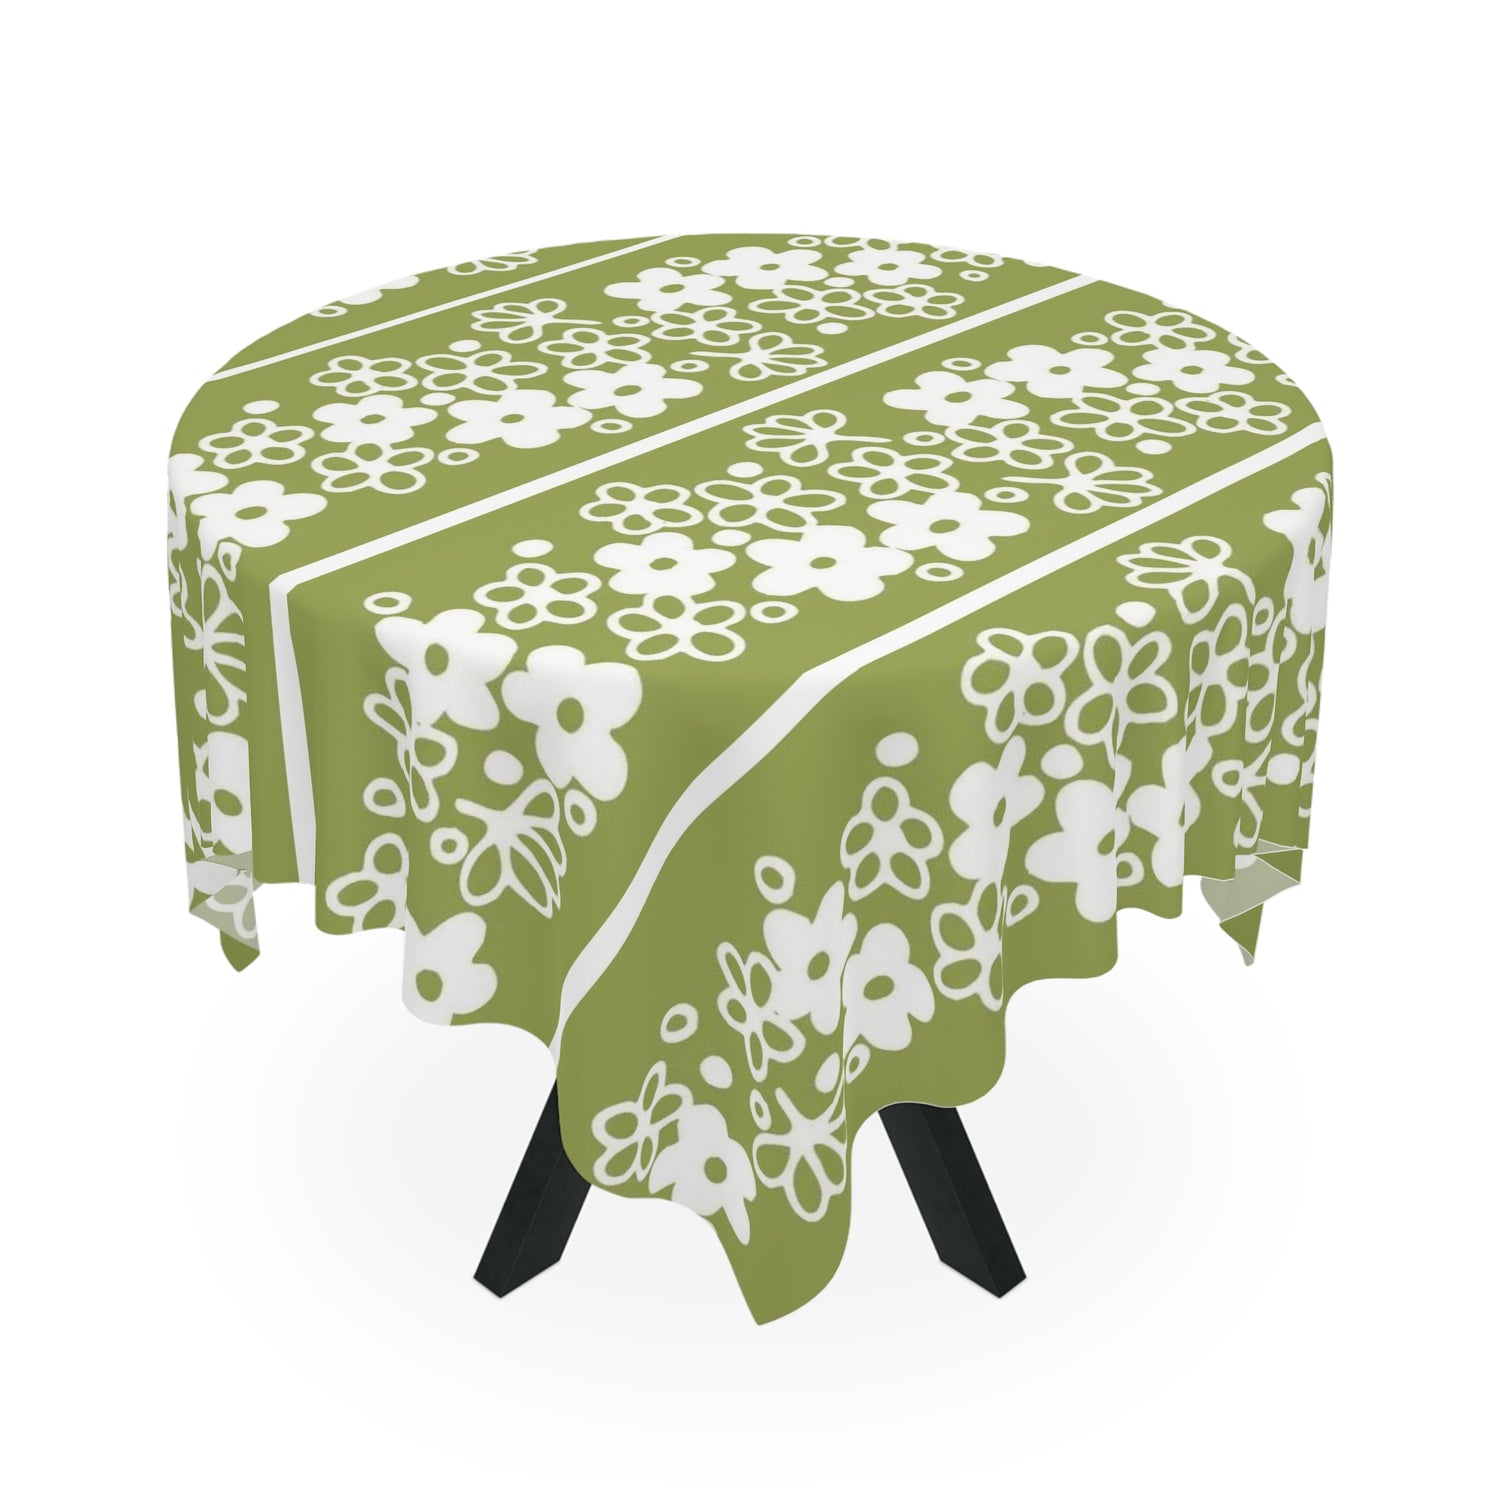 Spring Blossom Pyrex Daisy, Green Retro Tablecloth